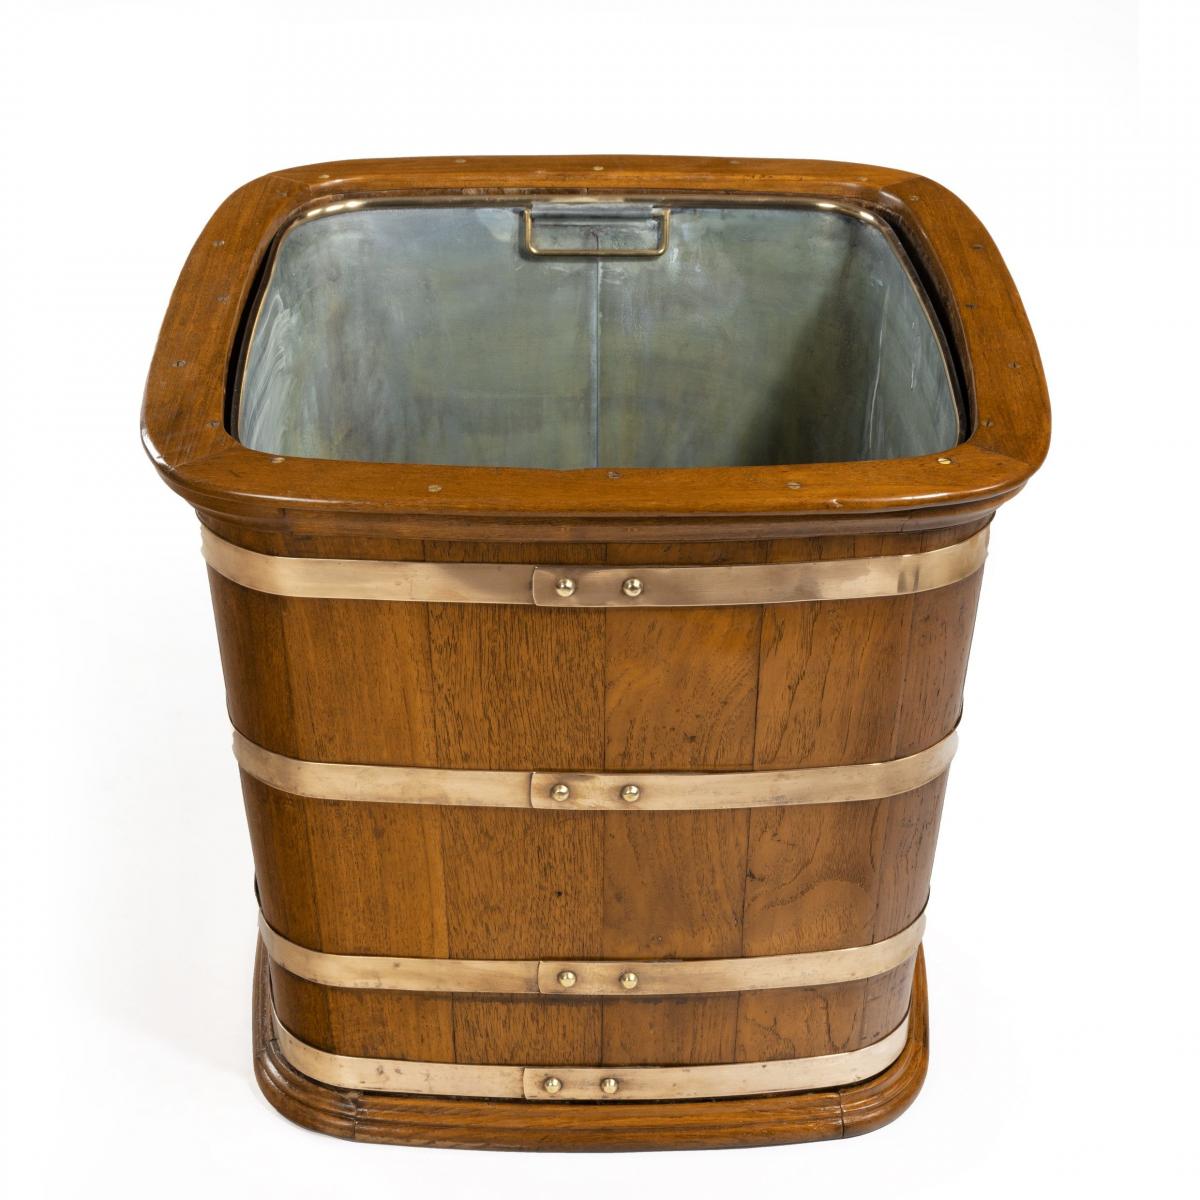 A Large Edwardian Copper-Bound Teak Log Box